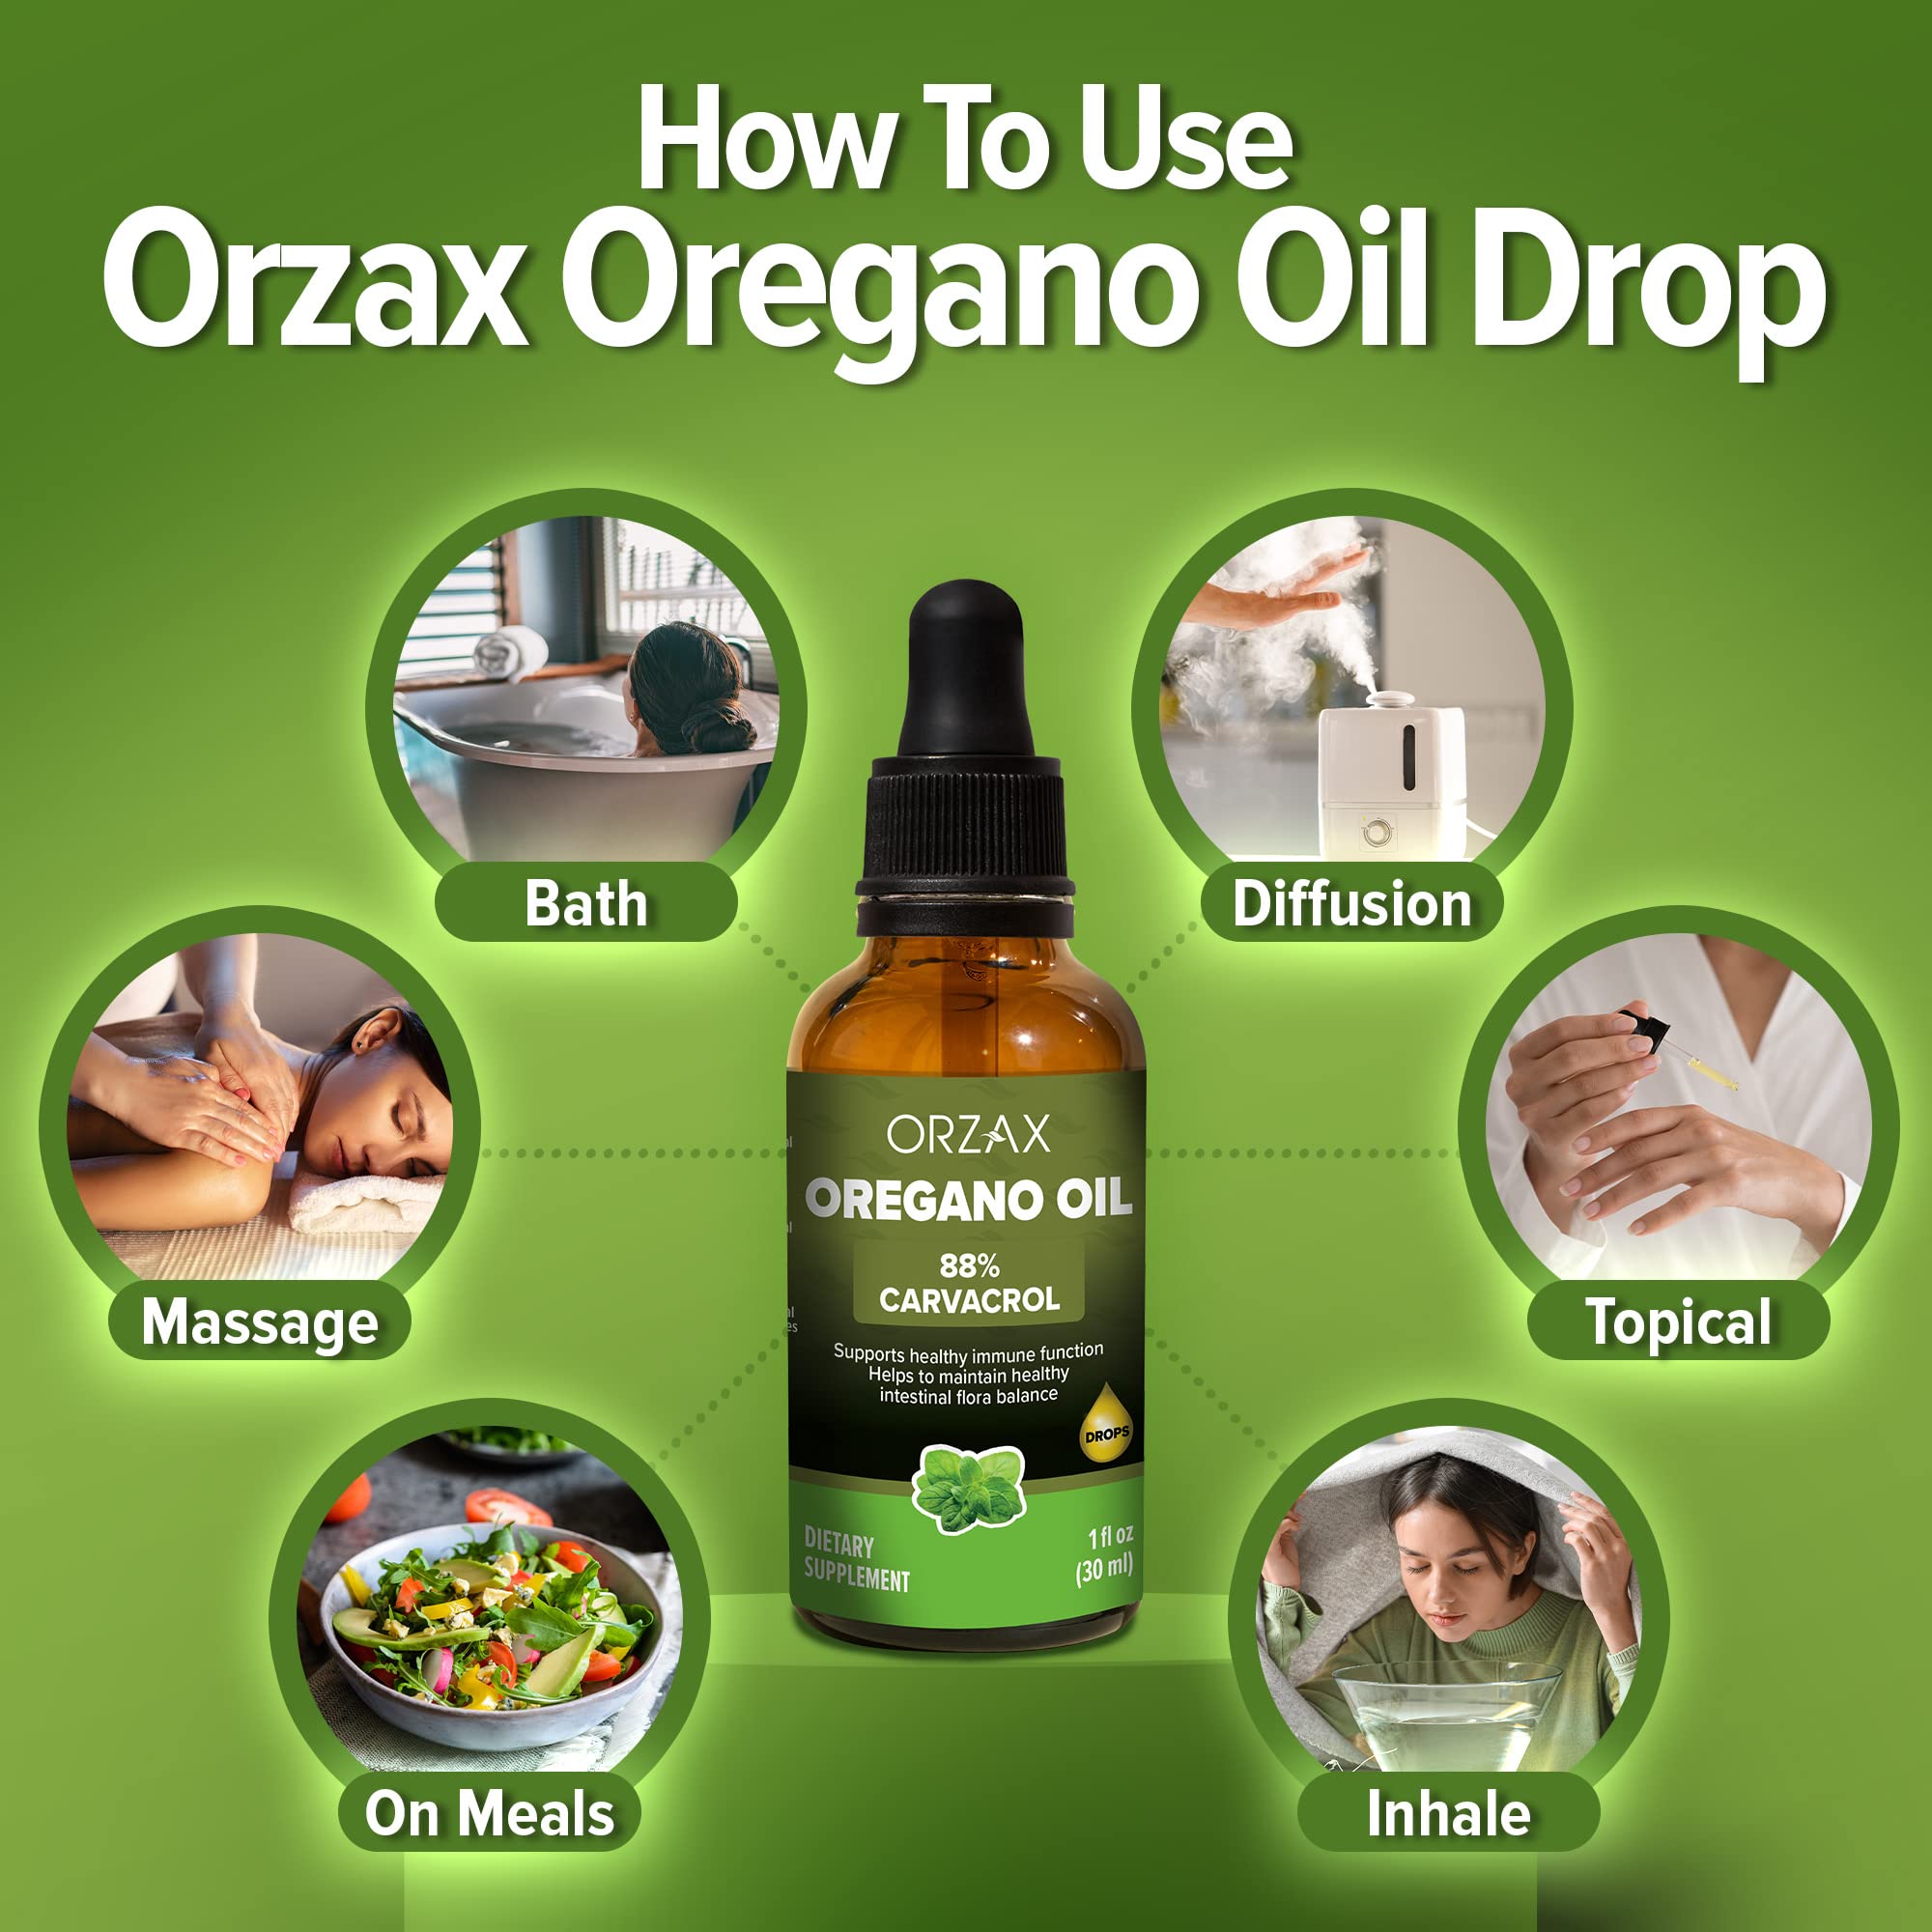 ORZAX Oregano Oil Drops, 1 Fl Oz (30 ml), Wild Oregano Oil with 88% Carvacrol, Helps Immune Support, 200 Day Supply